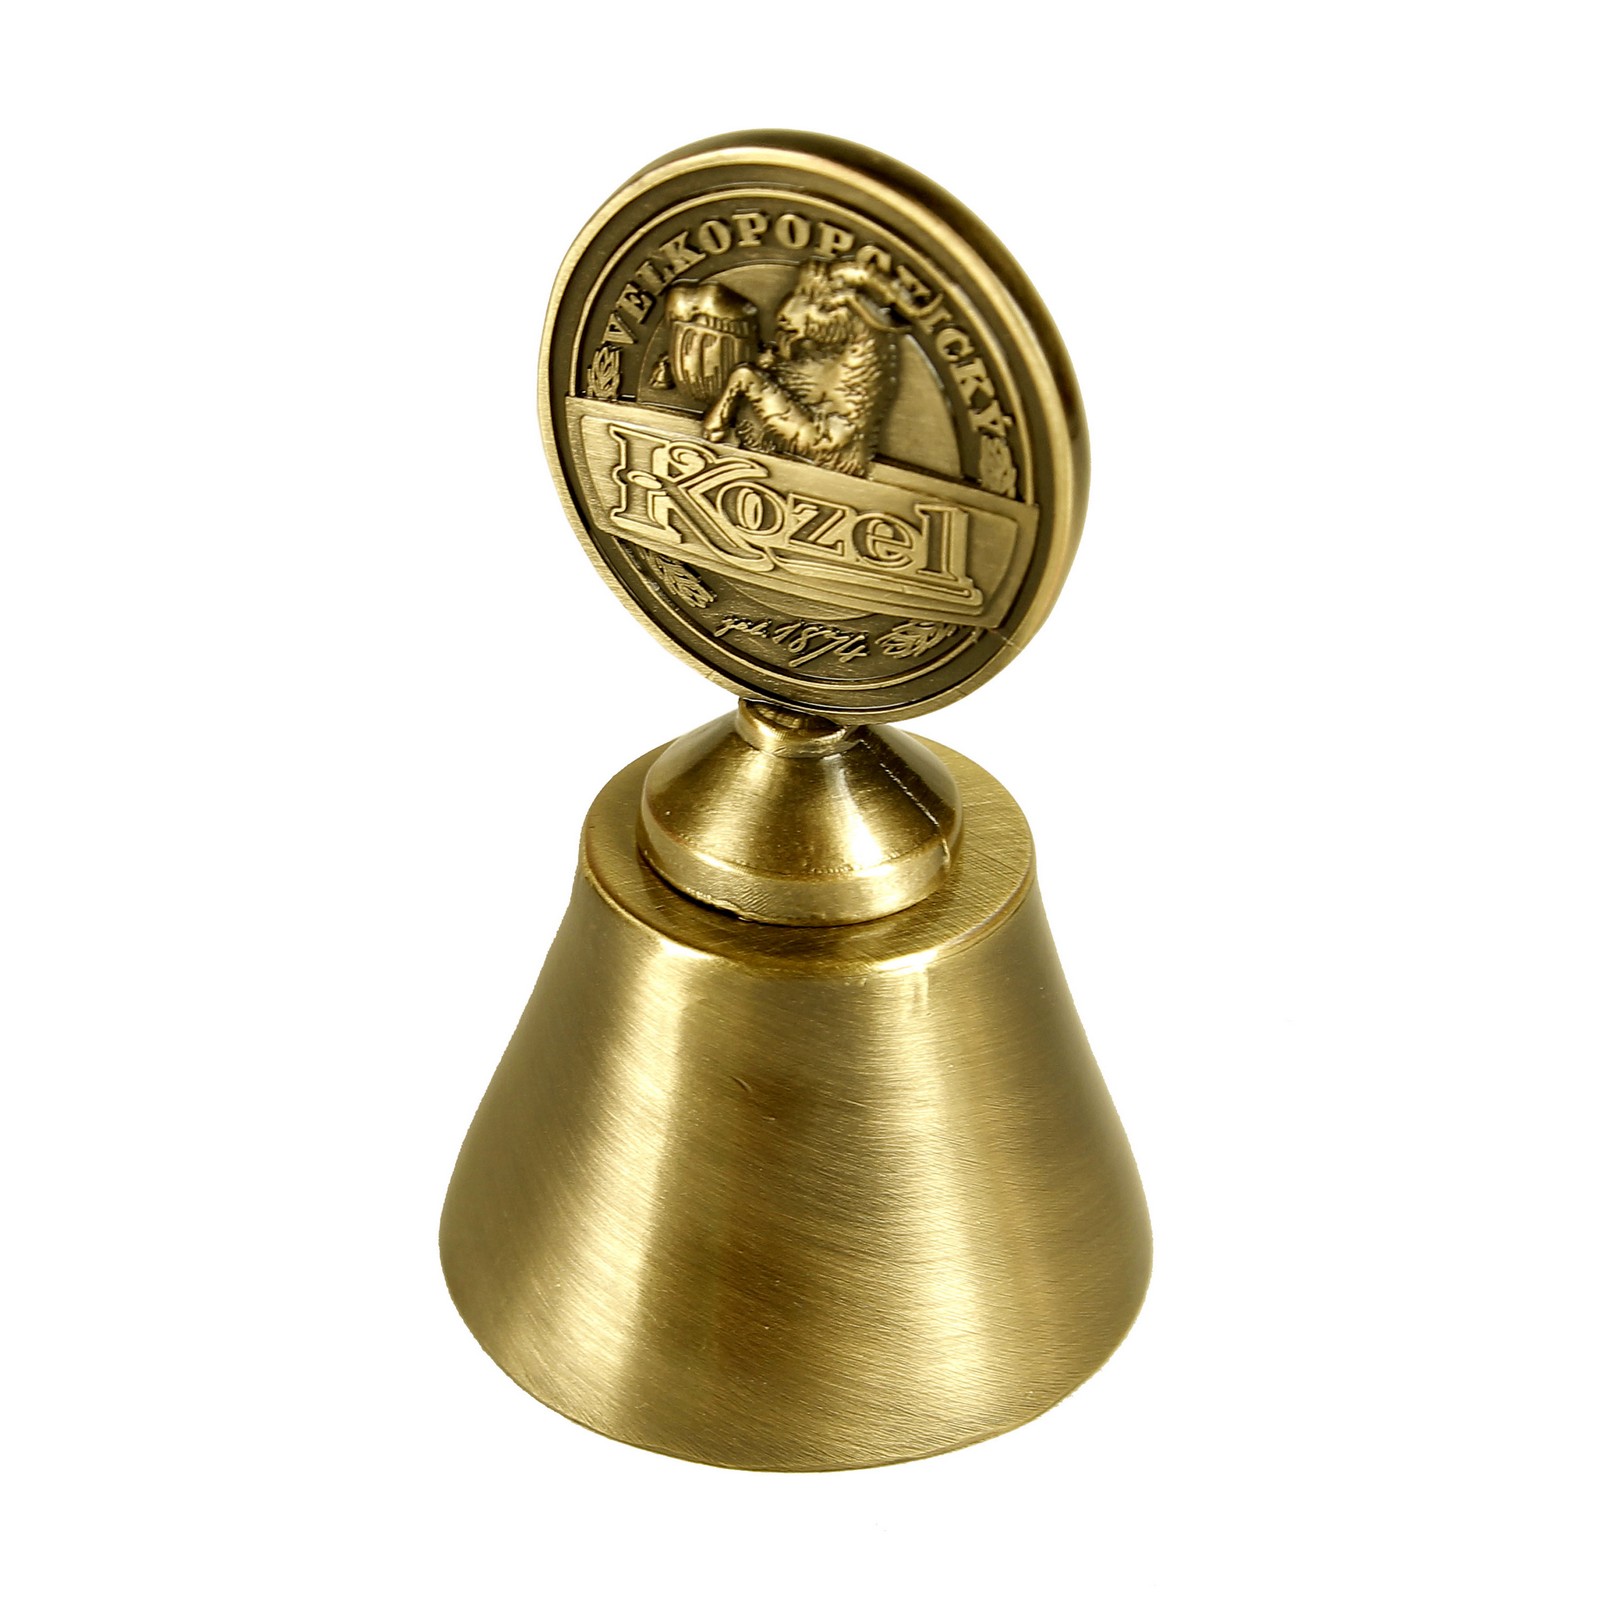 Kozel little bell